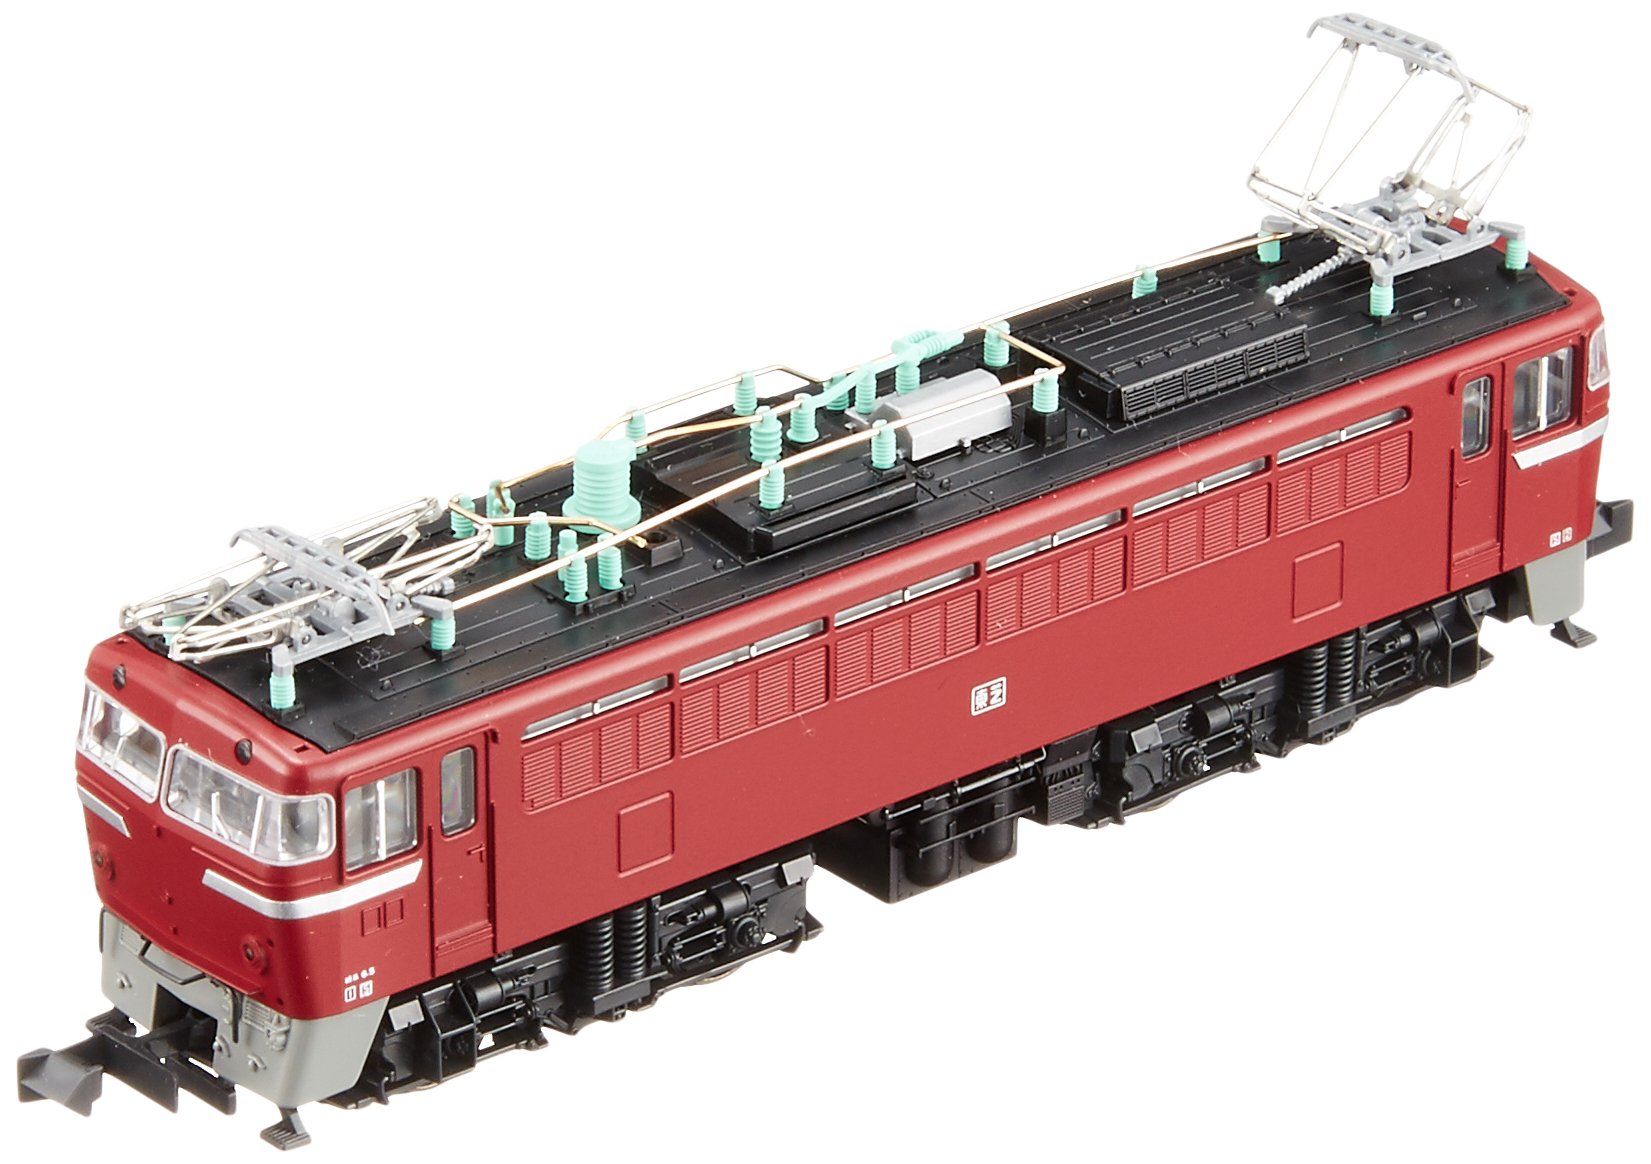 Kato N Gauge 3012 Electric Locomotive Railway Model Ed73 1000